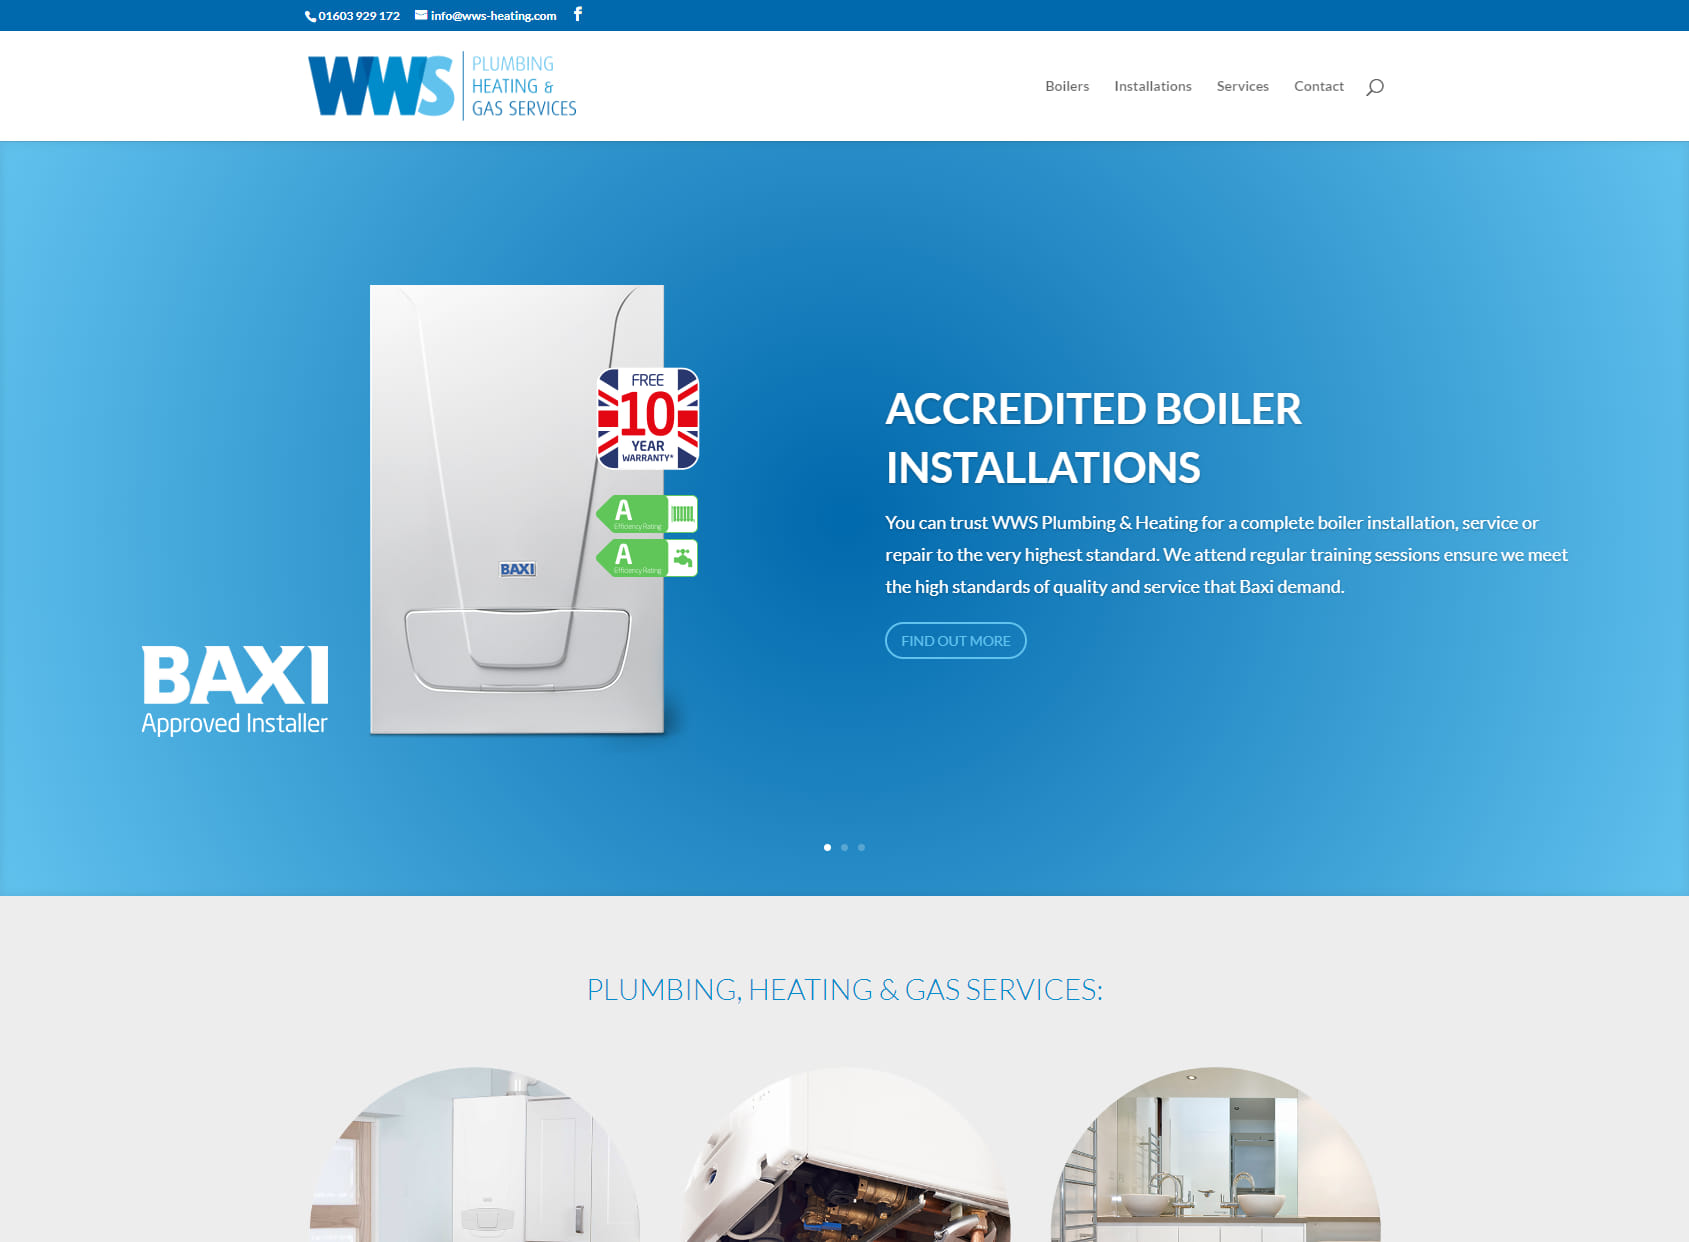 WWS Plumbing & Heating